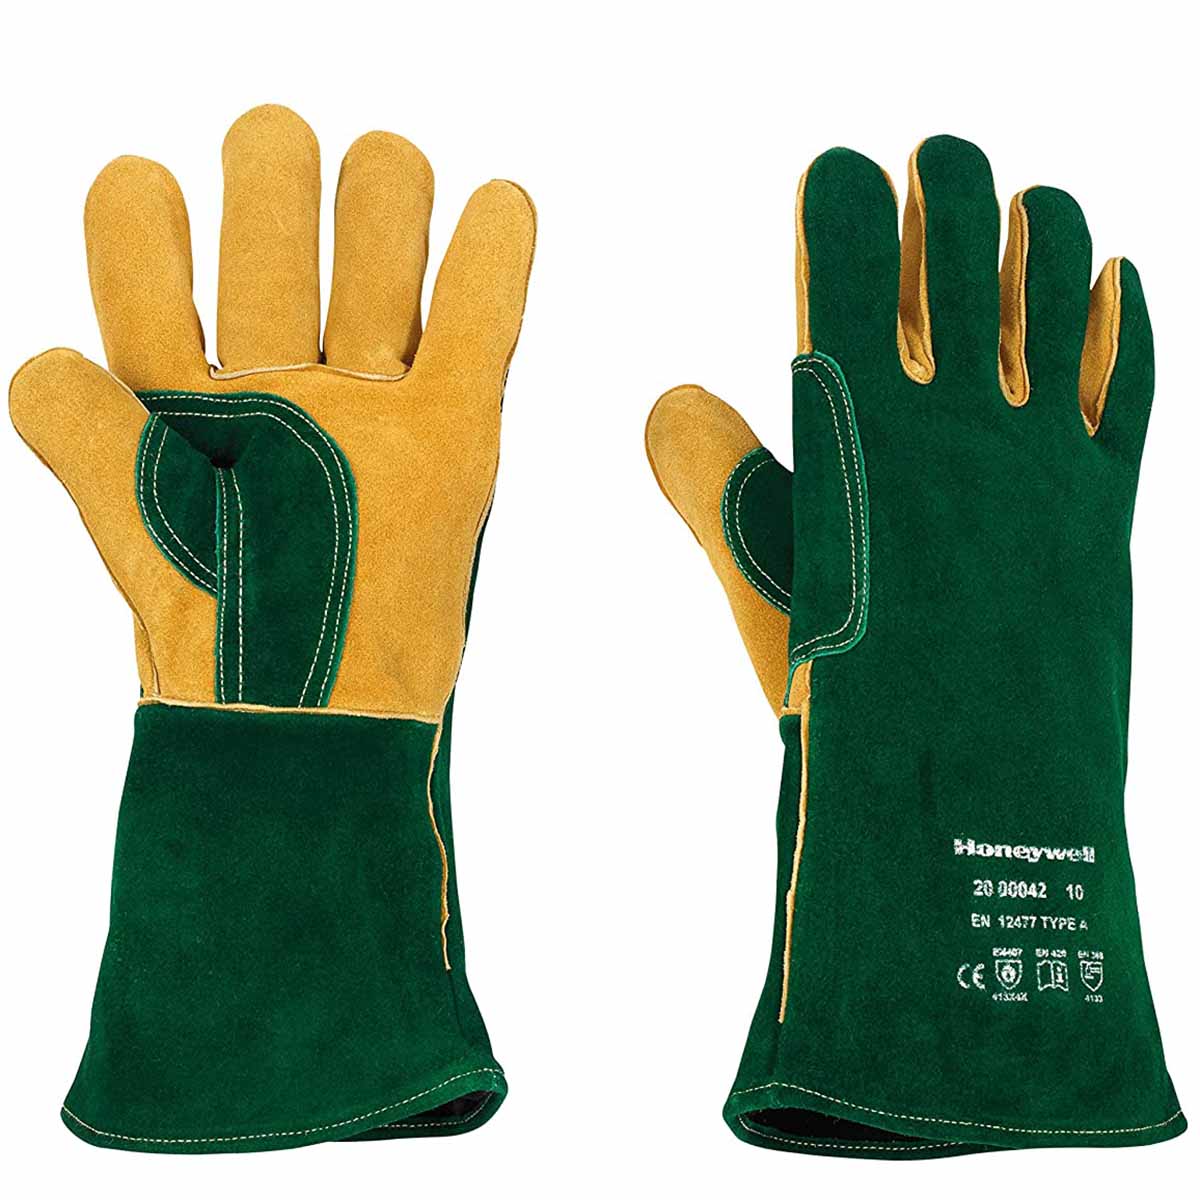 Honeywell 2000042 Green Welding Plus Gauntlet Gloves Size 9